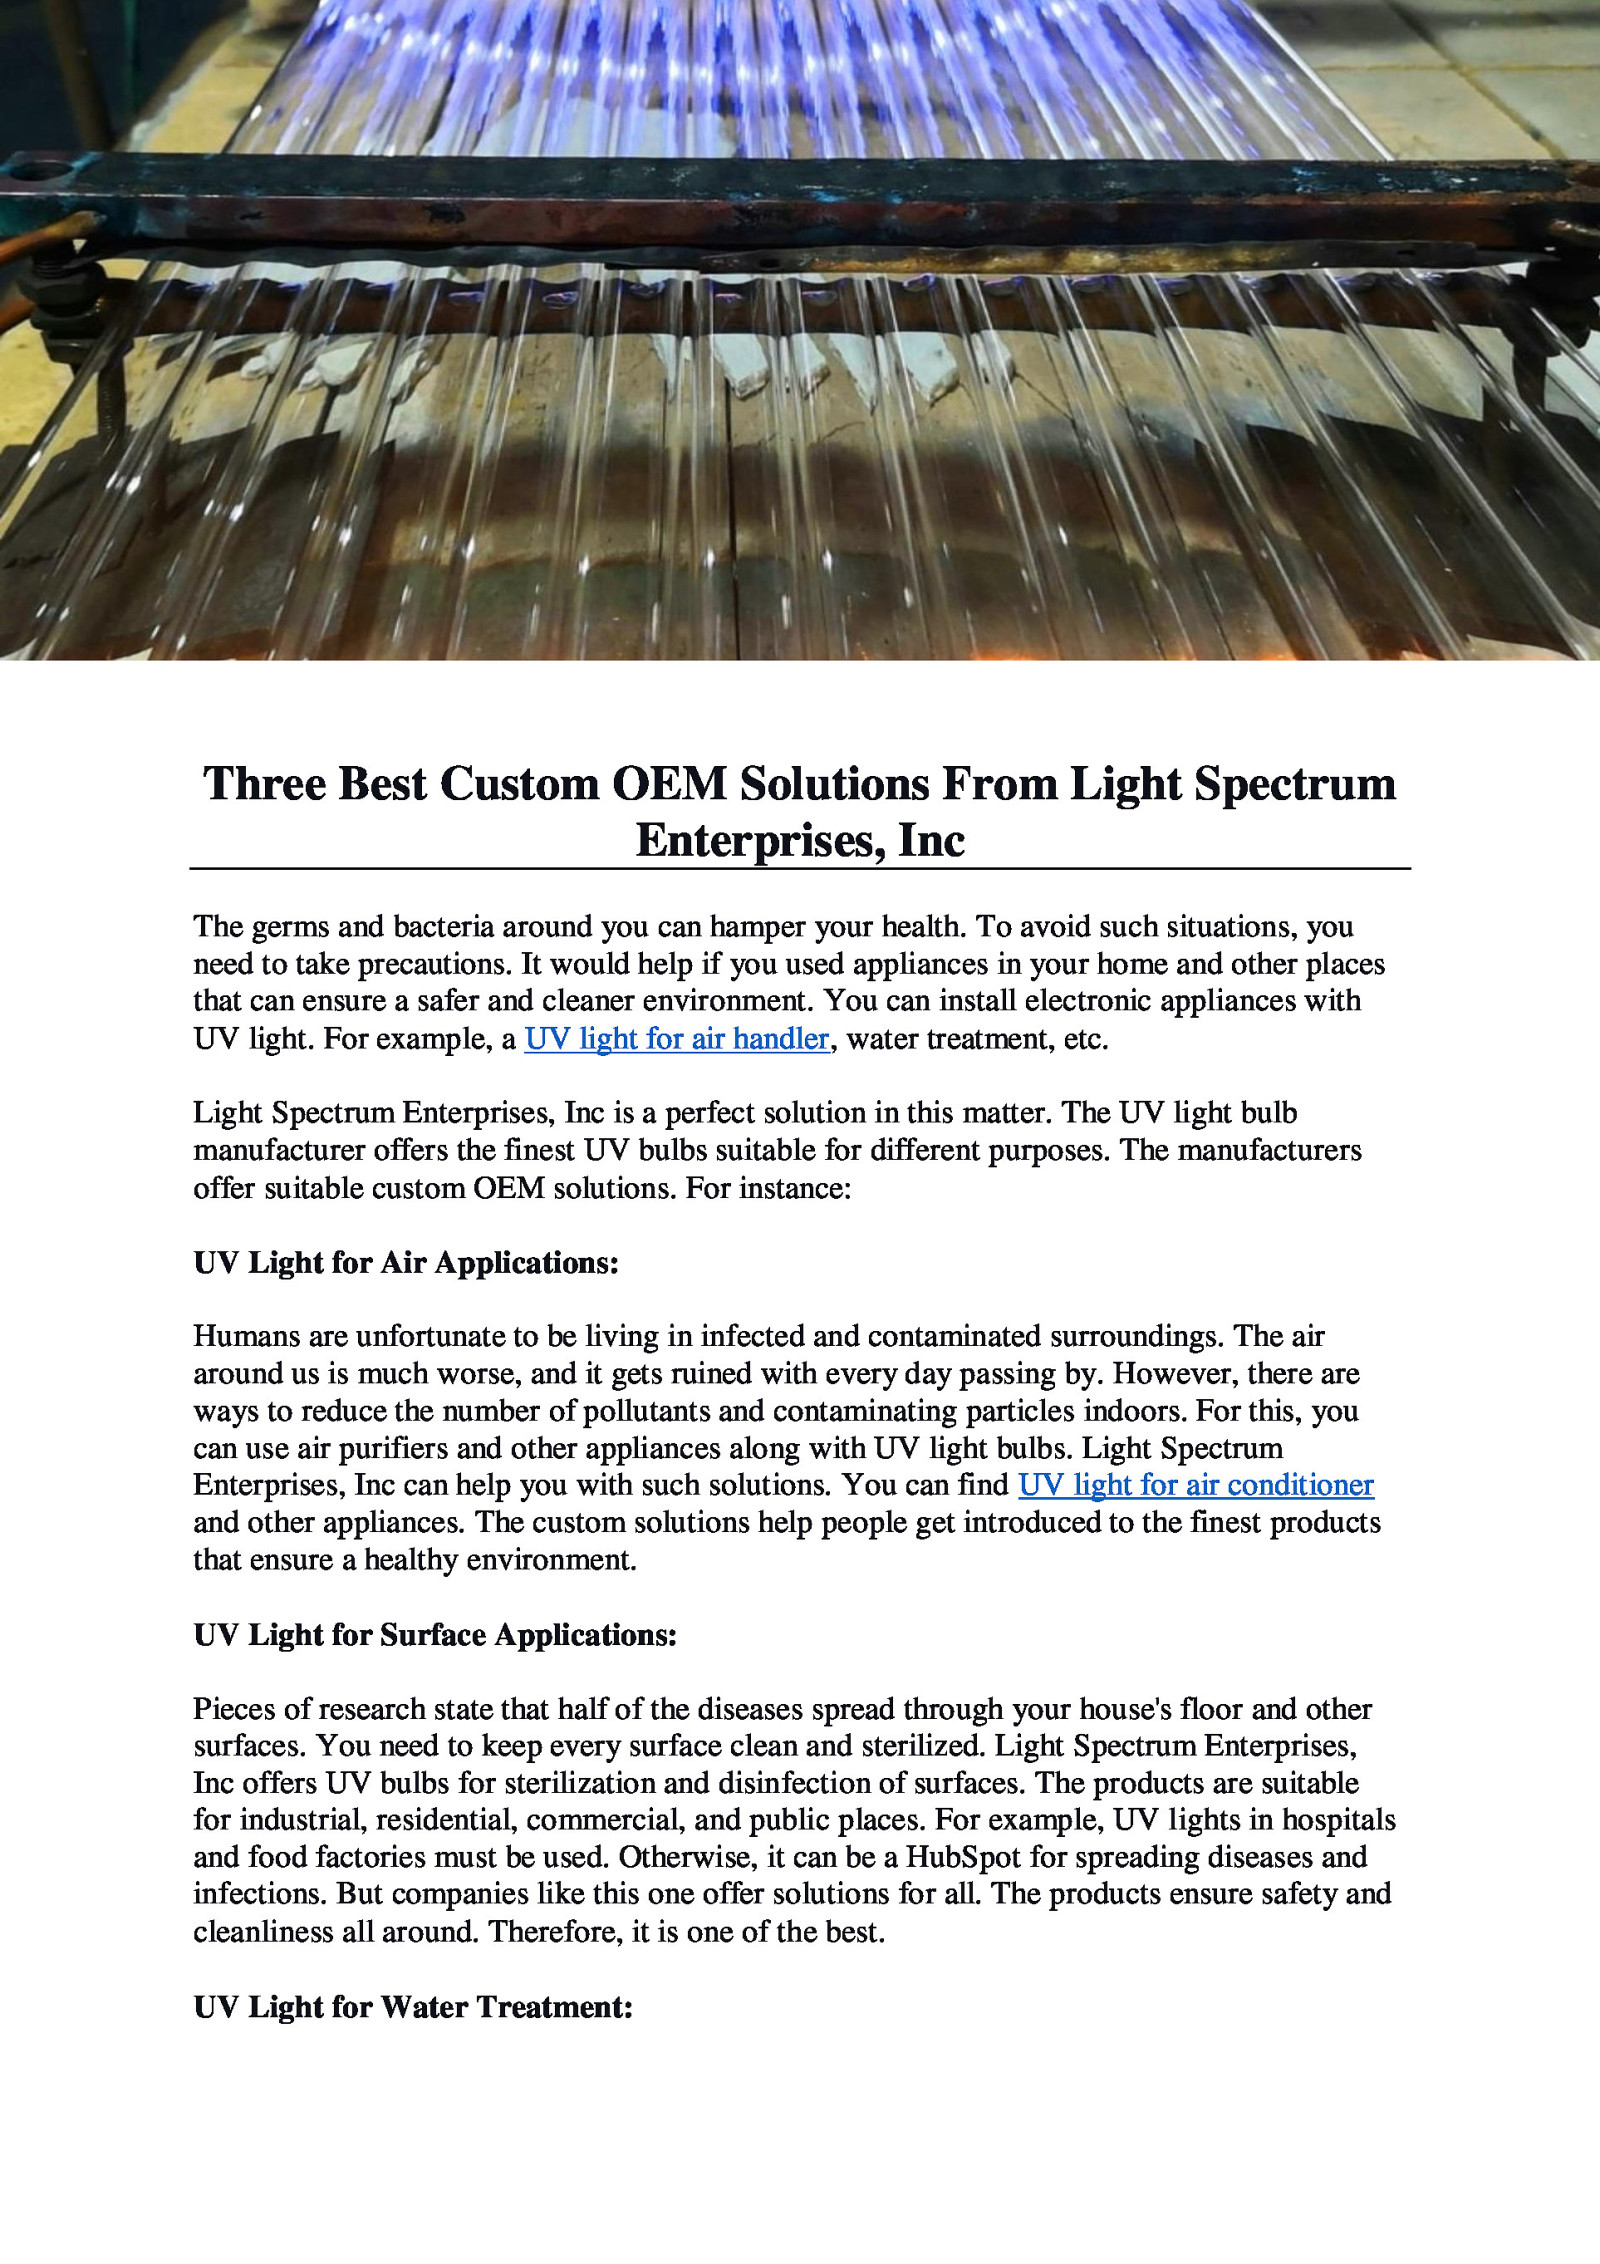 Three Best Custom OEM Solutions From Light Spectrum Enterprises, Inc by Light Spectrum enterprises